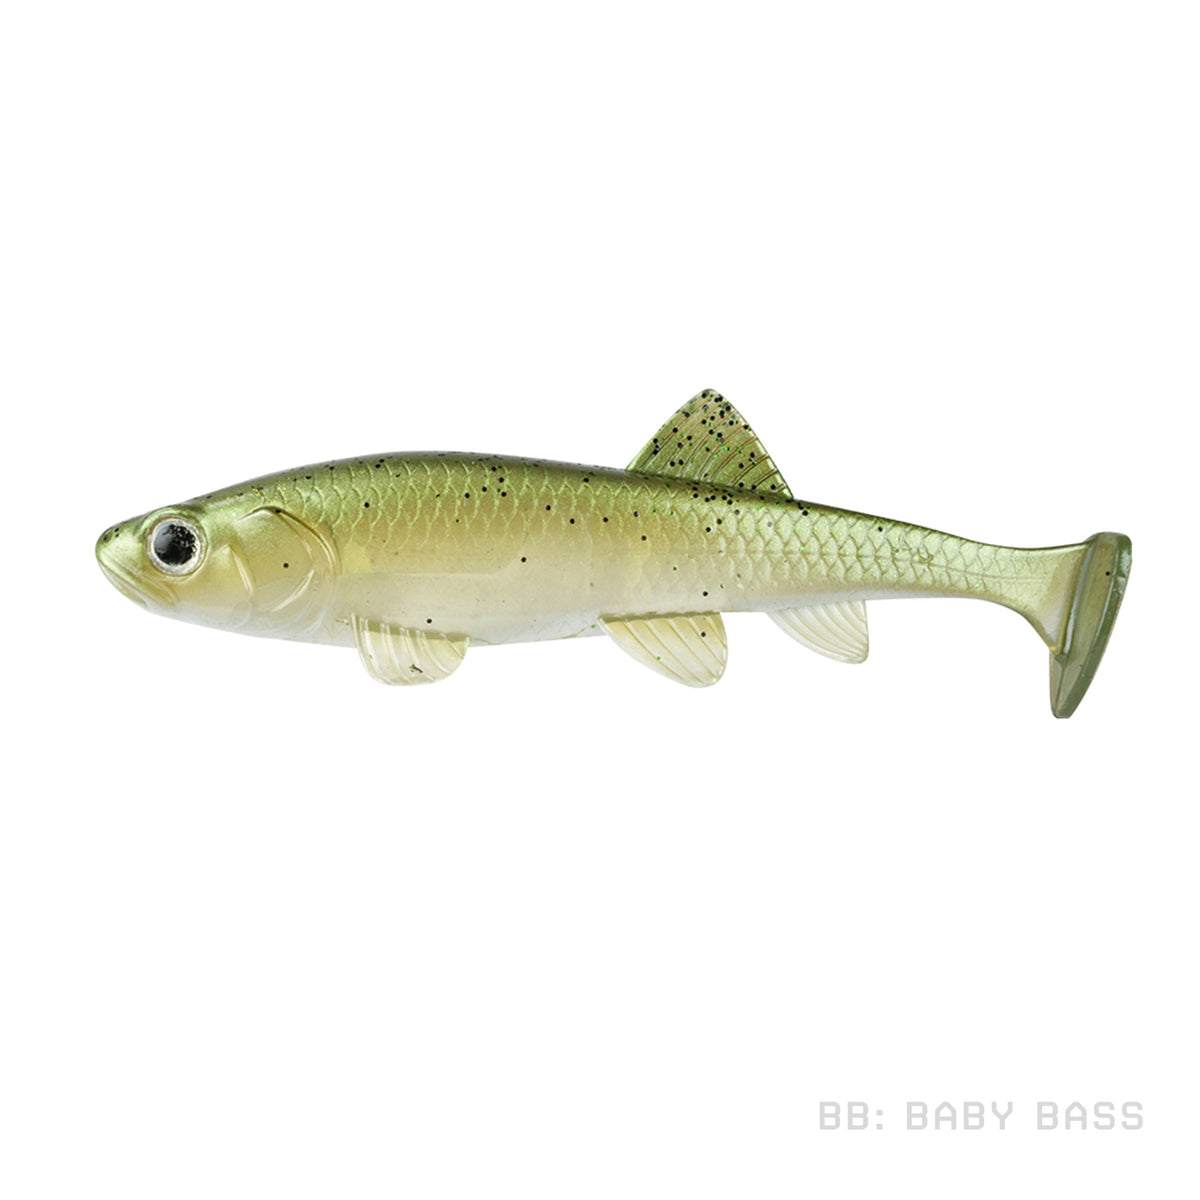 Bio-Minnow Soft Swimbaits – FishLab